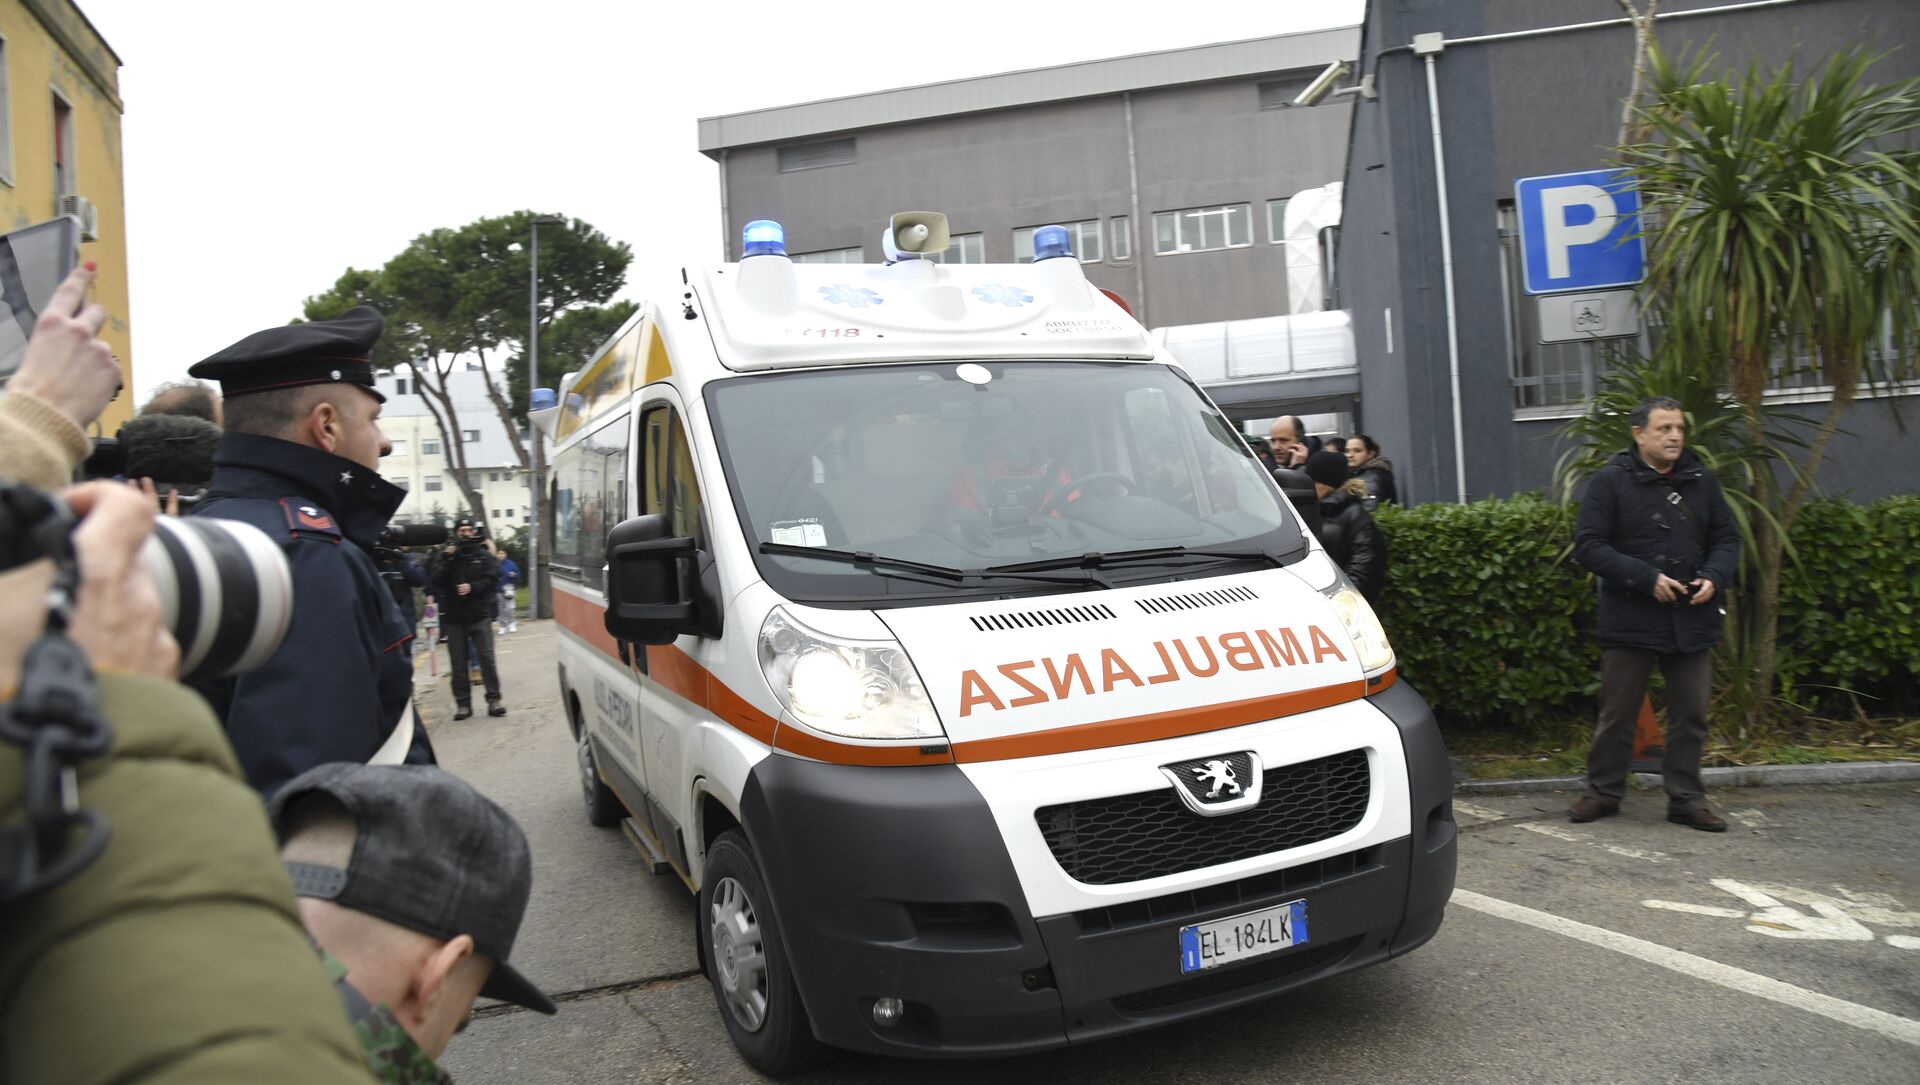 Ambulance arrive. Ambulance Italy.